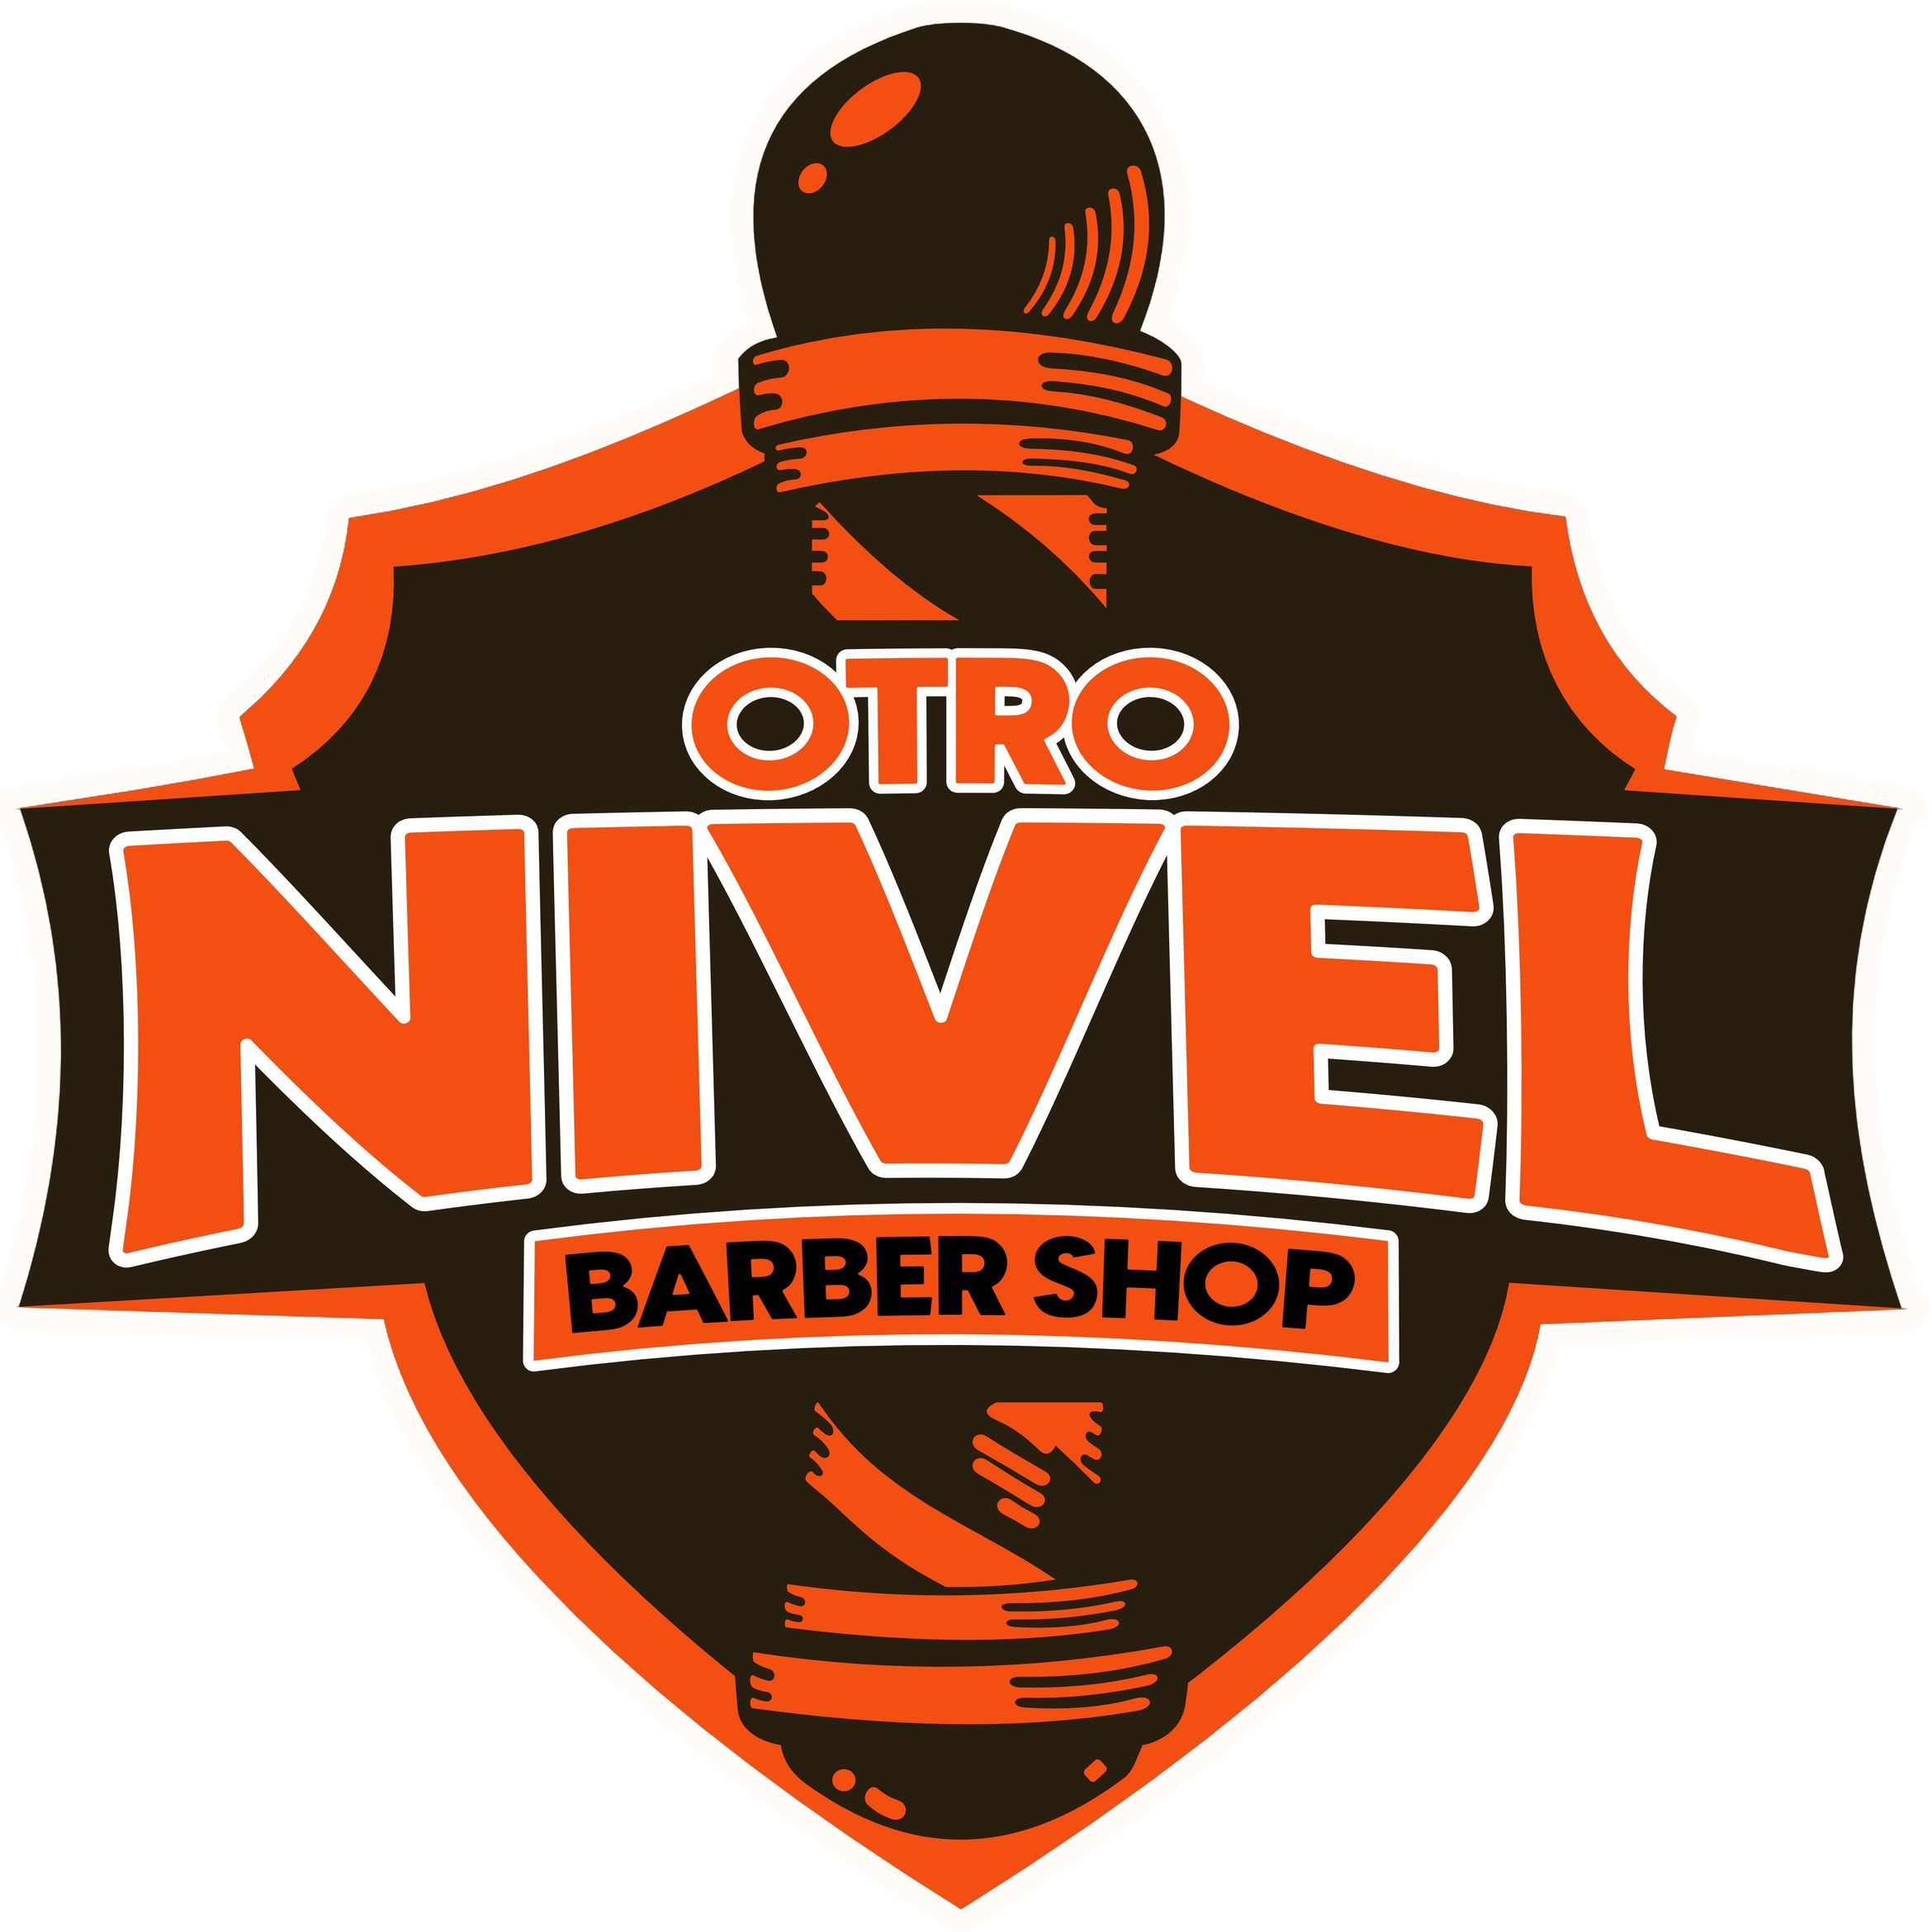 Yorsh Barber / OTRO NIVEL BARBER SHOP, 8122 Antoine Dr, Houston, 77088